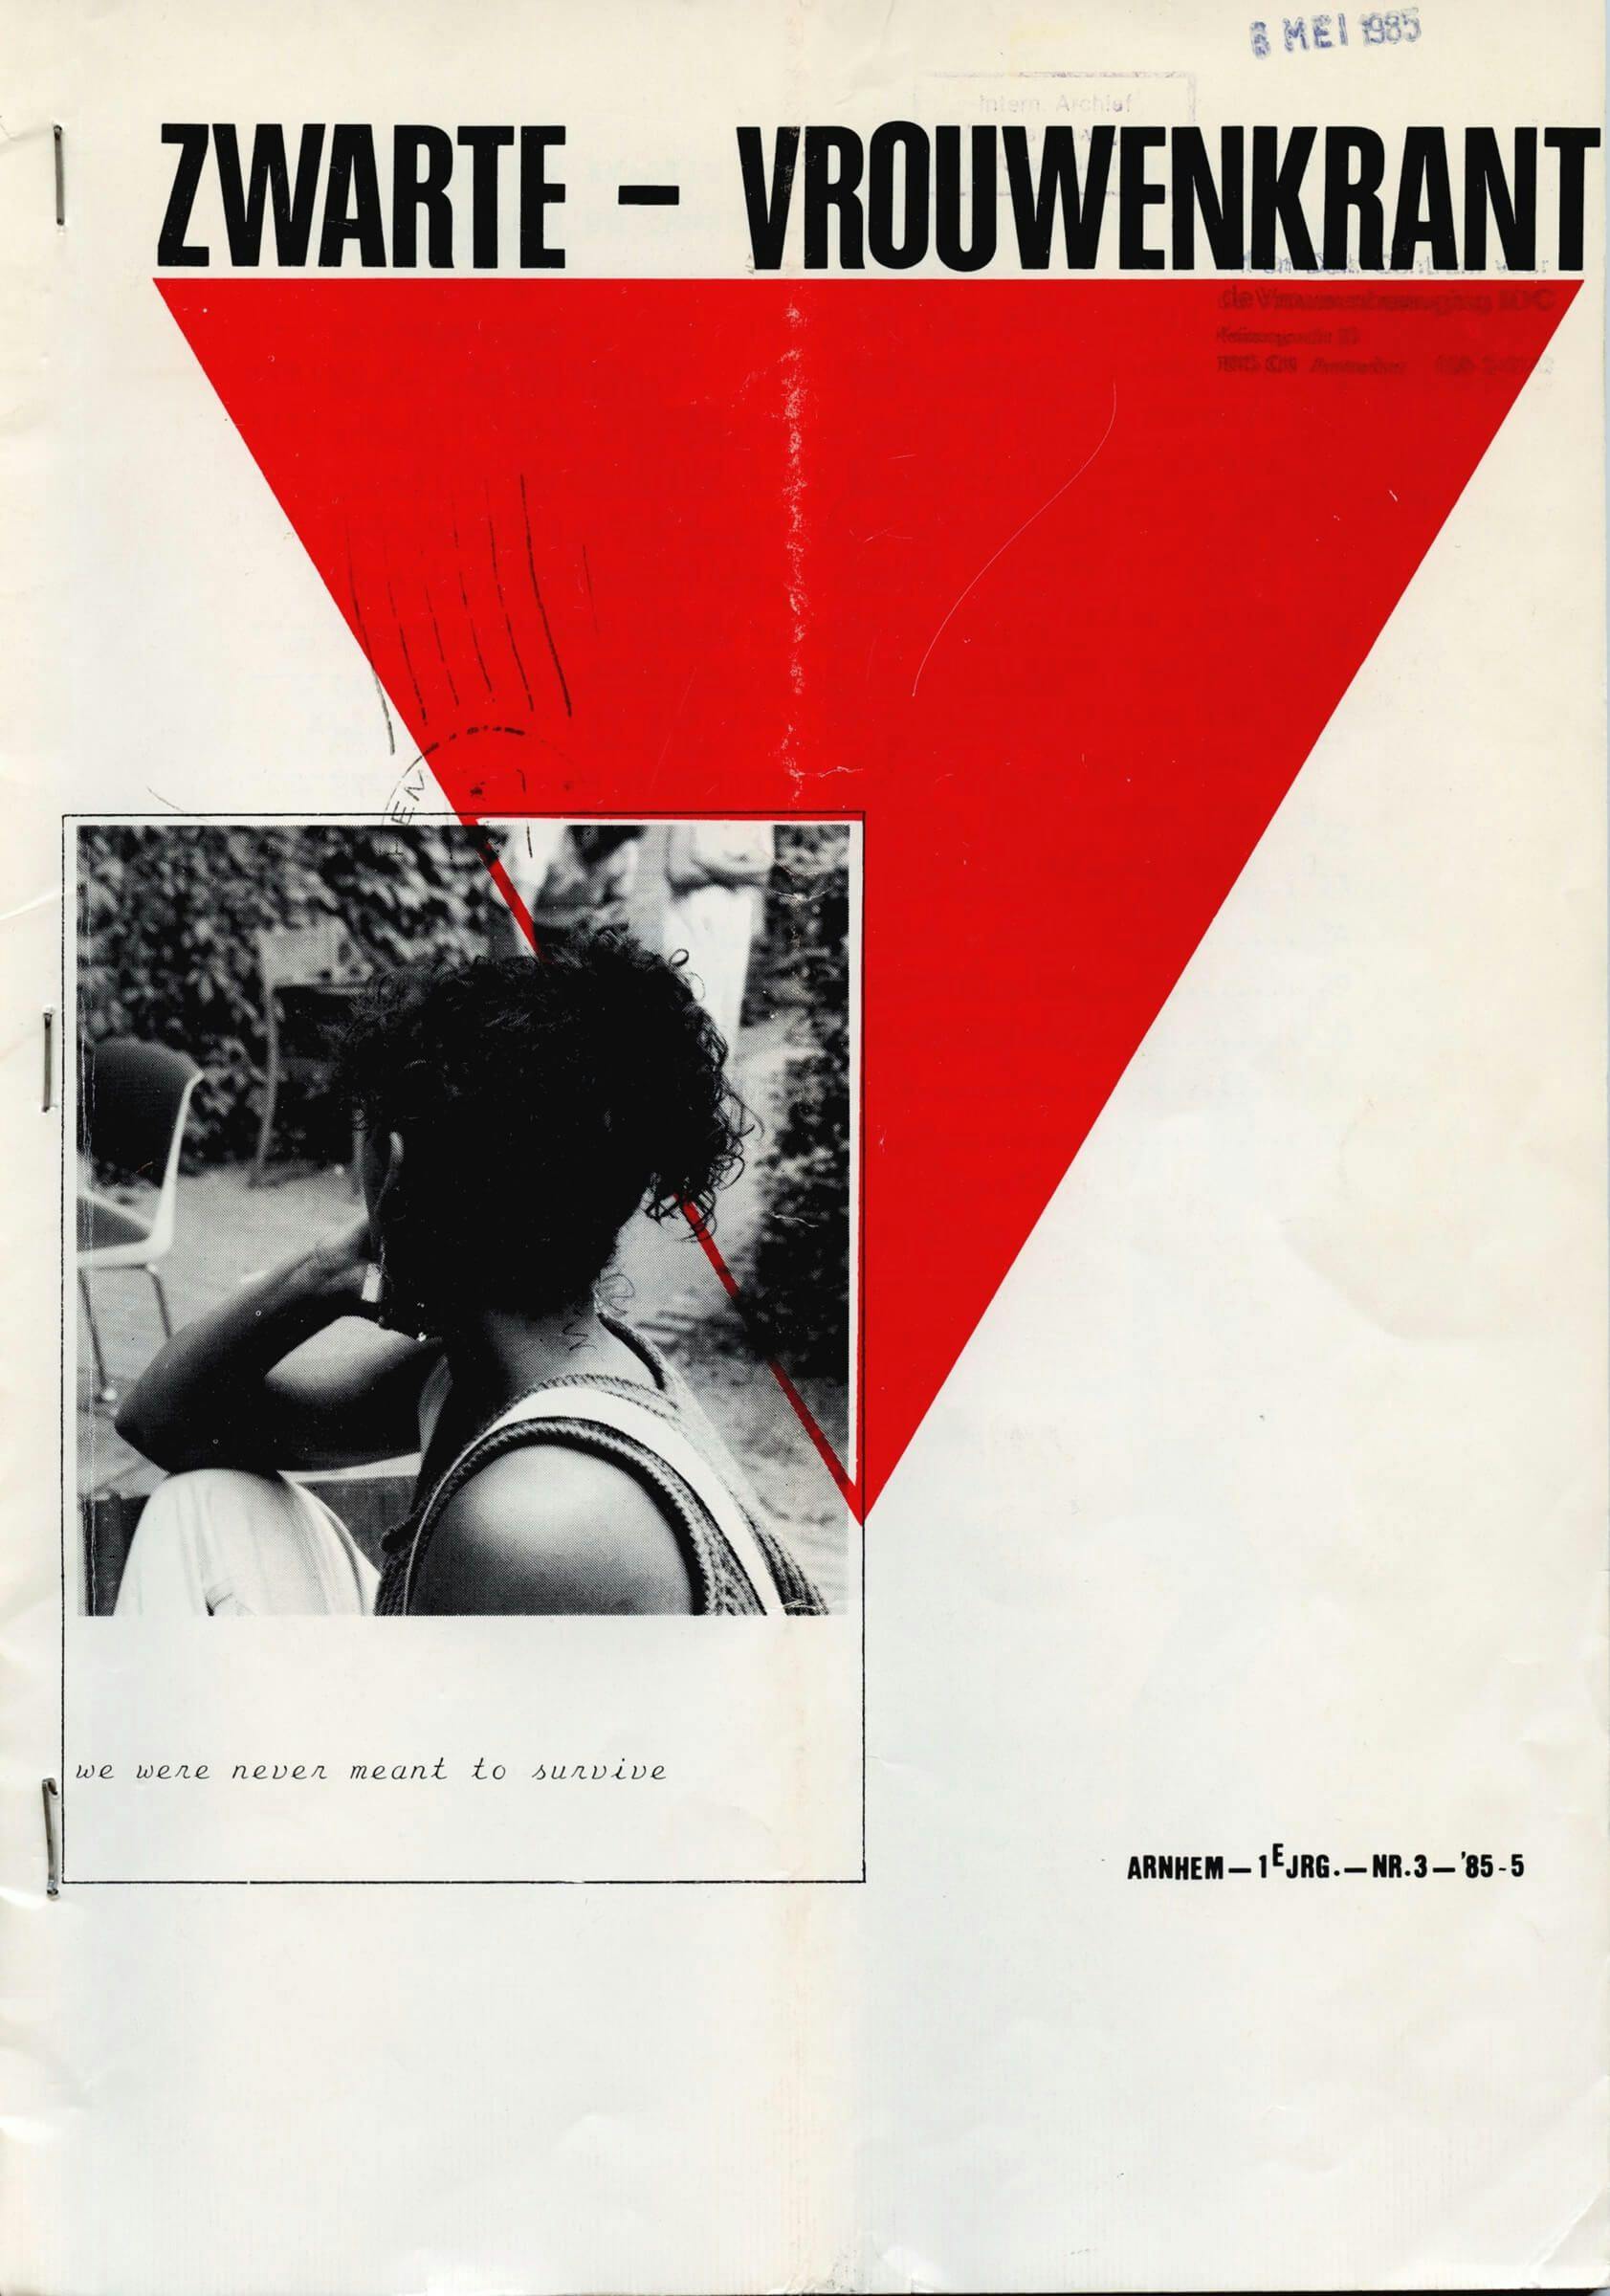 Cover “Umoja – Zwarte vrouwenkrant” [Umoja – Black Women’s Newspaper], published by Stichting Zwarte Vrouwen en Racisme [Black Women and Racism Foundation], Arnhem, no. 3, 1985, design: Ans Sarianamual. Source: Collection IAV-Atria 